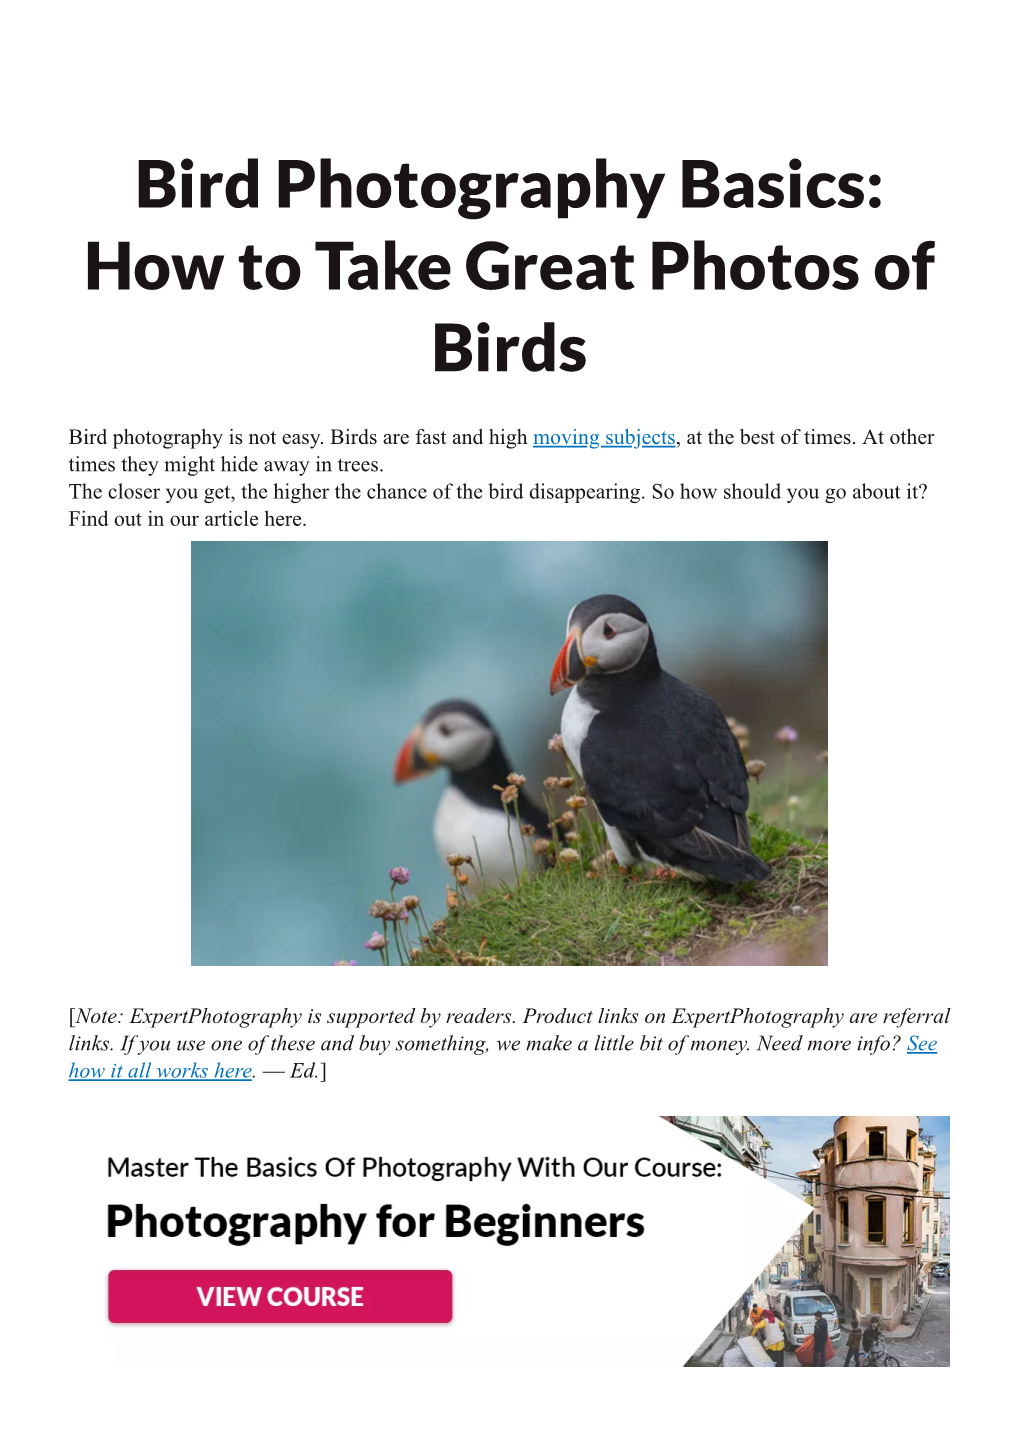 Bird Photography Basics: How to Take Great Photos of Birds